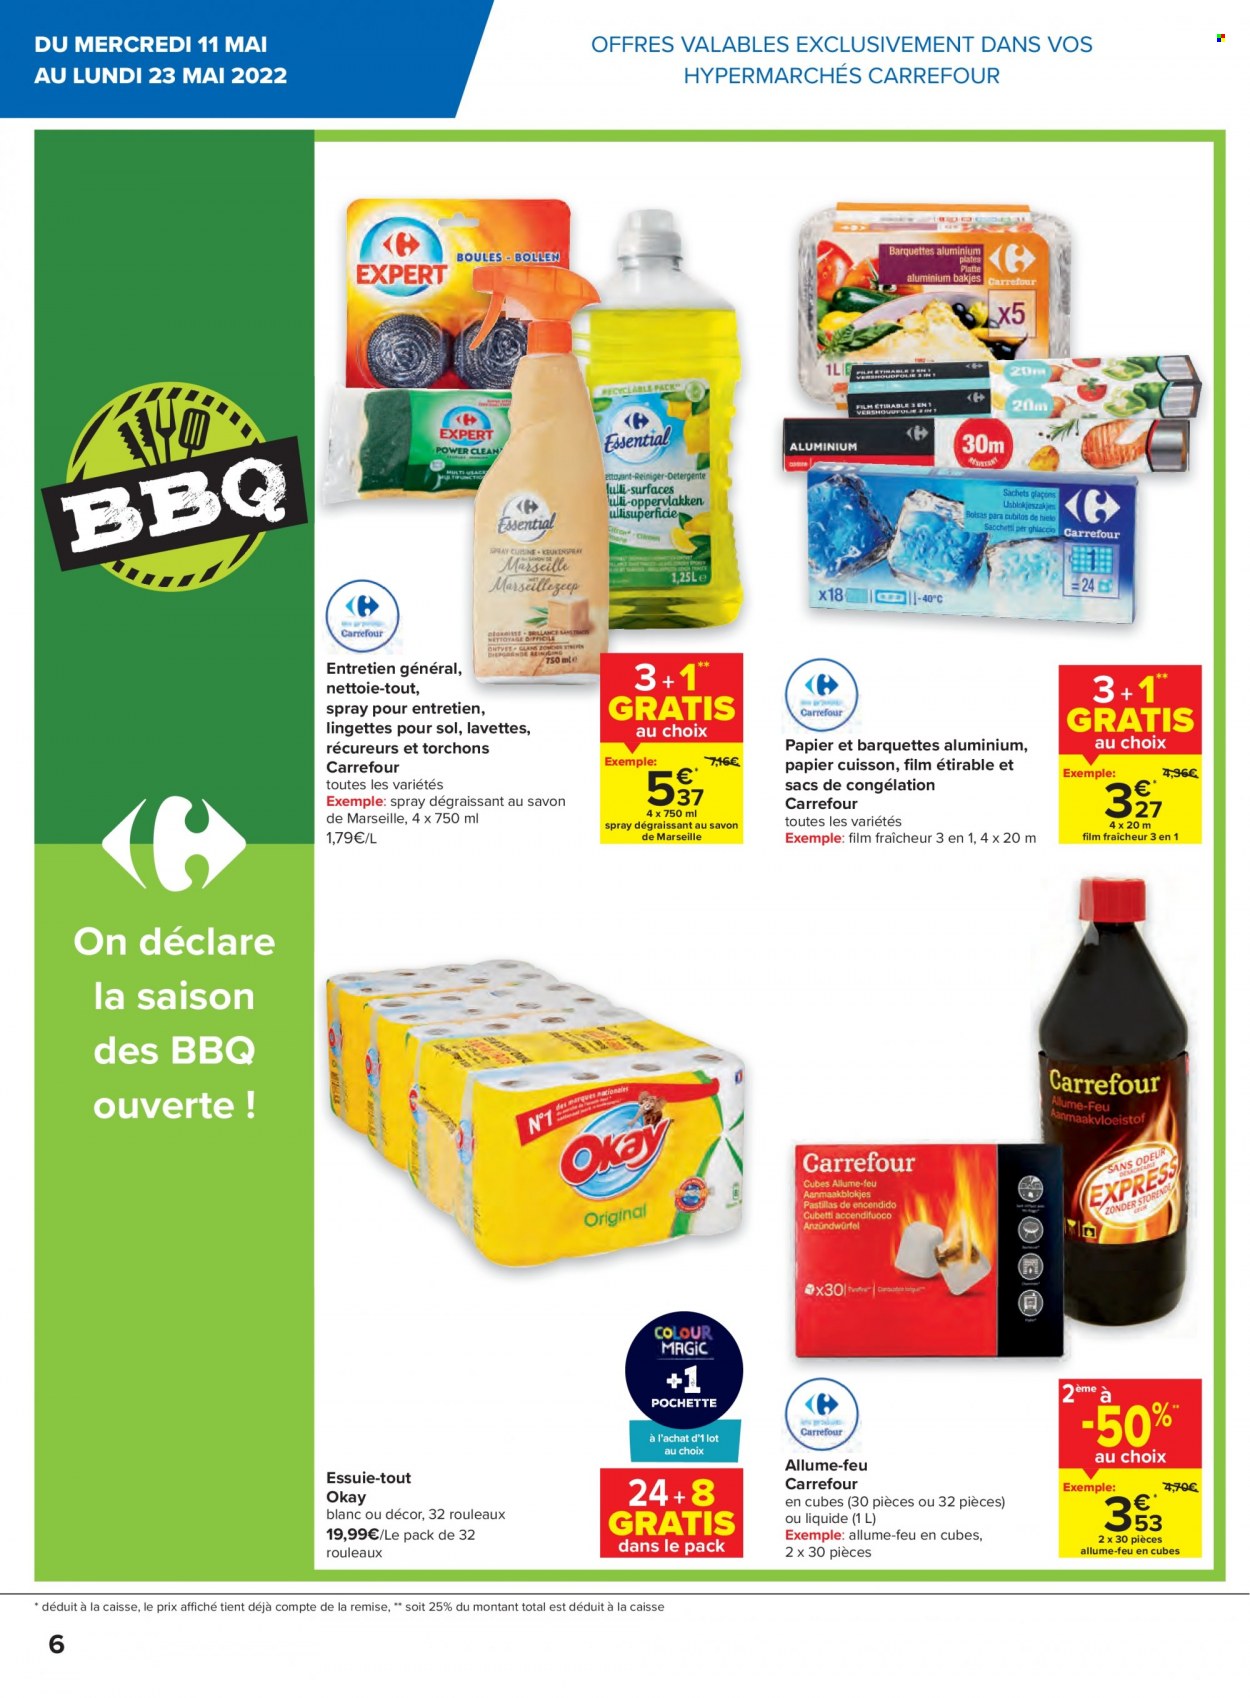 thumbnail - Carrefour hypermarkt-aanbieding - 11/05/2022 - 23/05/2022 -  producten in de aanbieding - BBQ. Pagina 6.